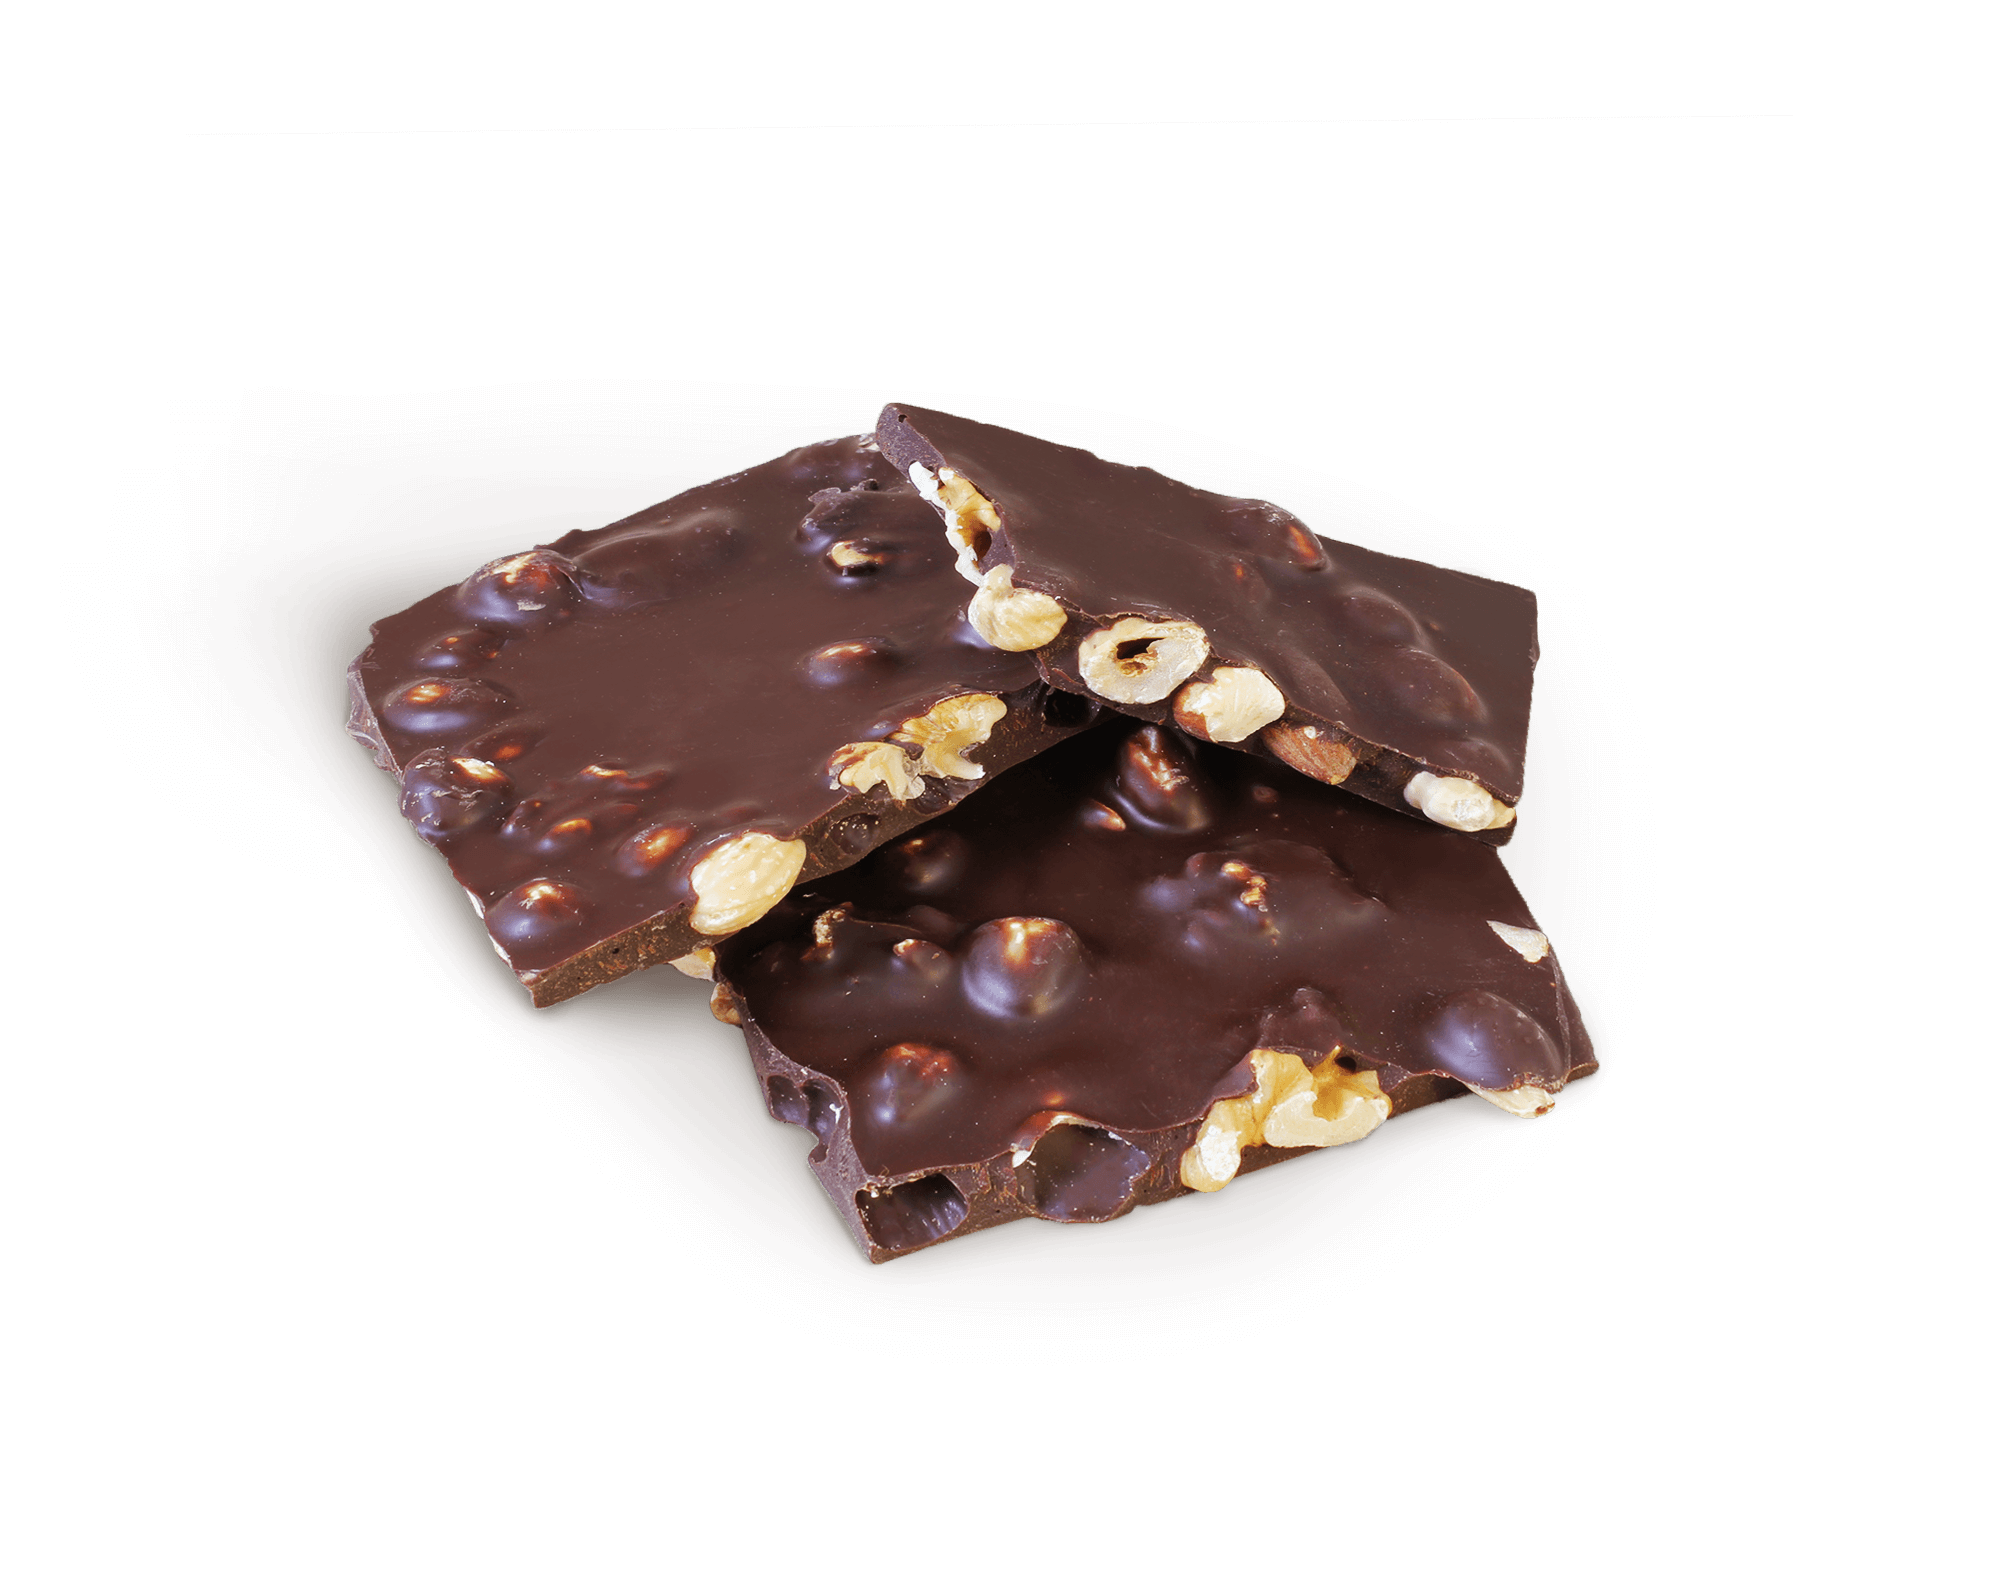 Haselnuss-Mandel-Walnuss in Zartbitterschokolade - Confiserie Dengel